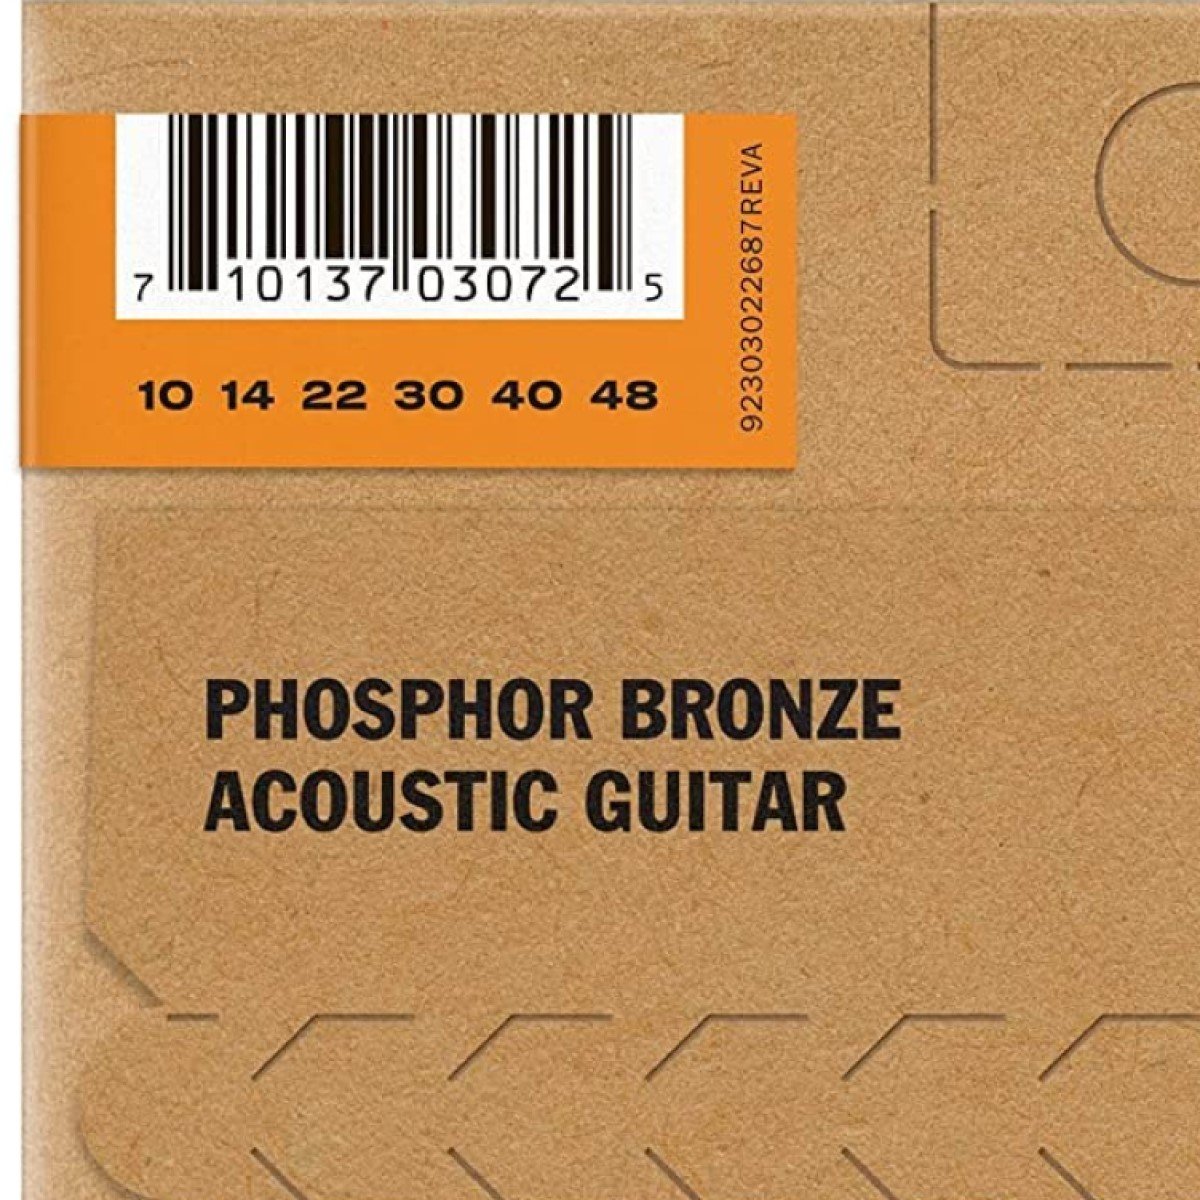 Dunlop Phosphor Bronze Extra Light Acoustic Guitar Strings, .010-.048